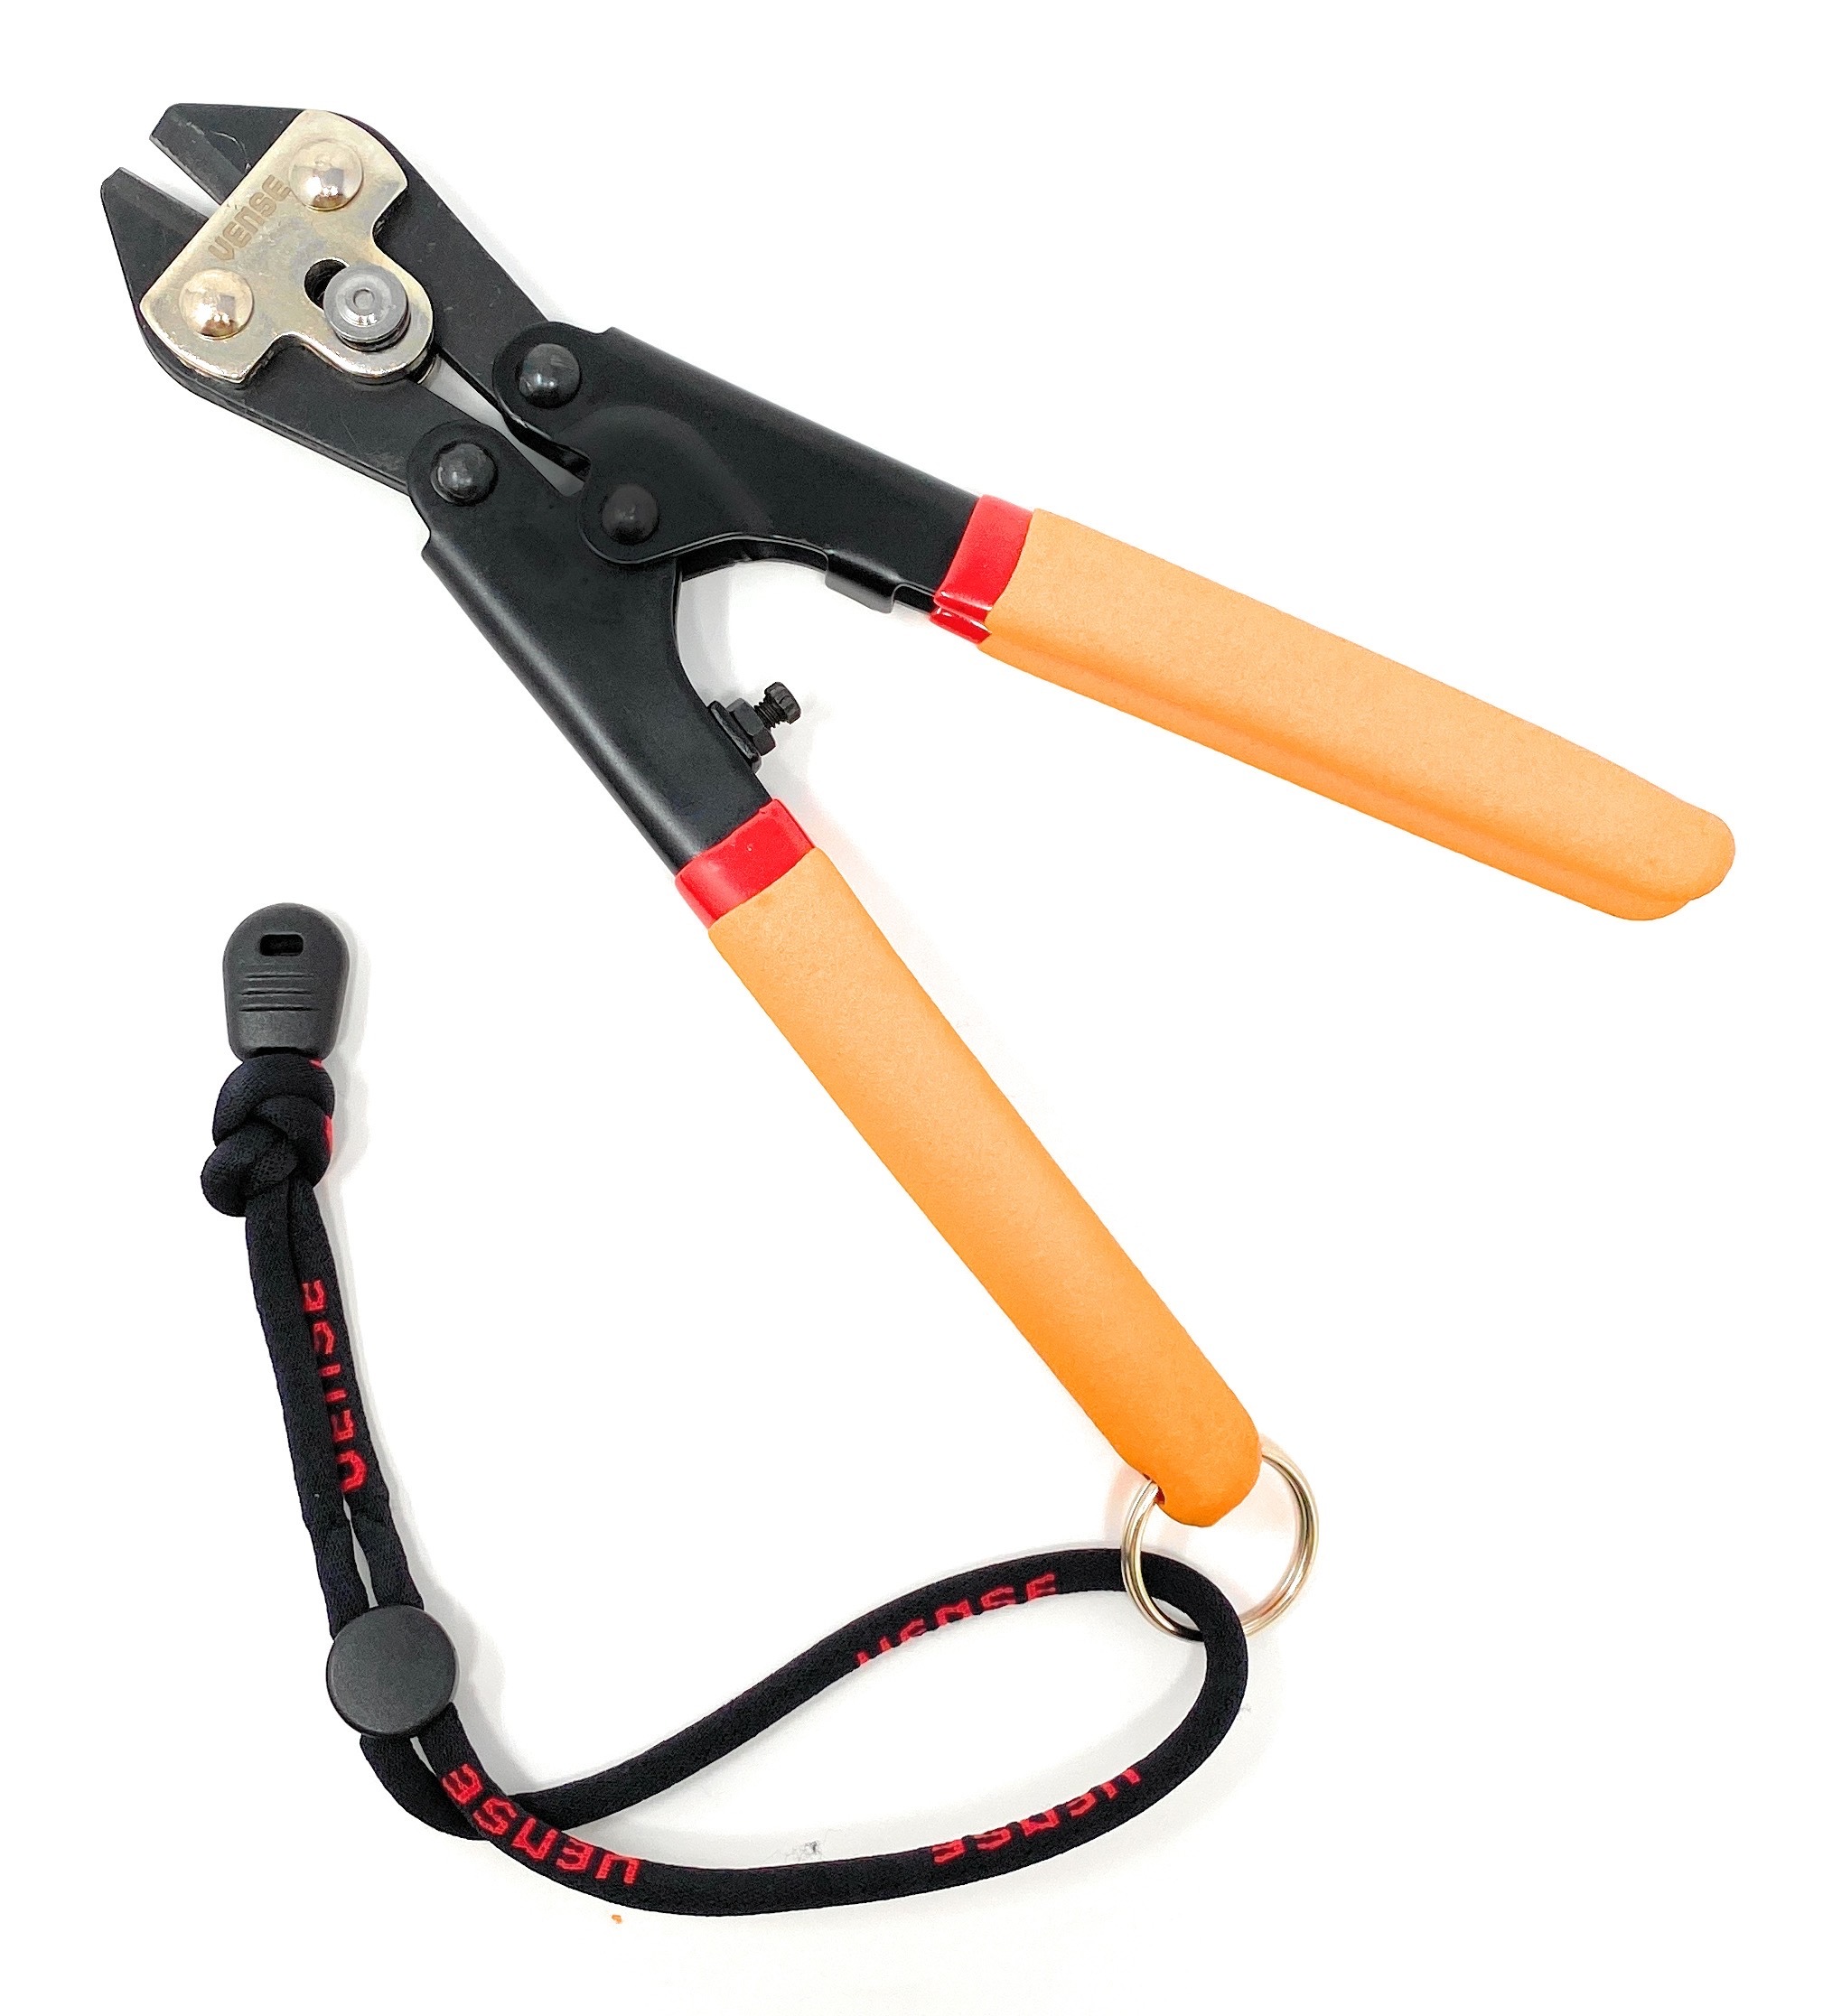 Vense Hook Cutter Pliers (Pinzas para cortar anzuelos)